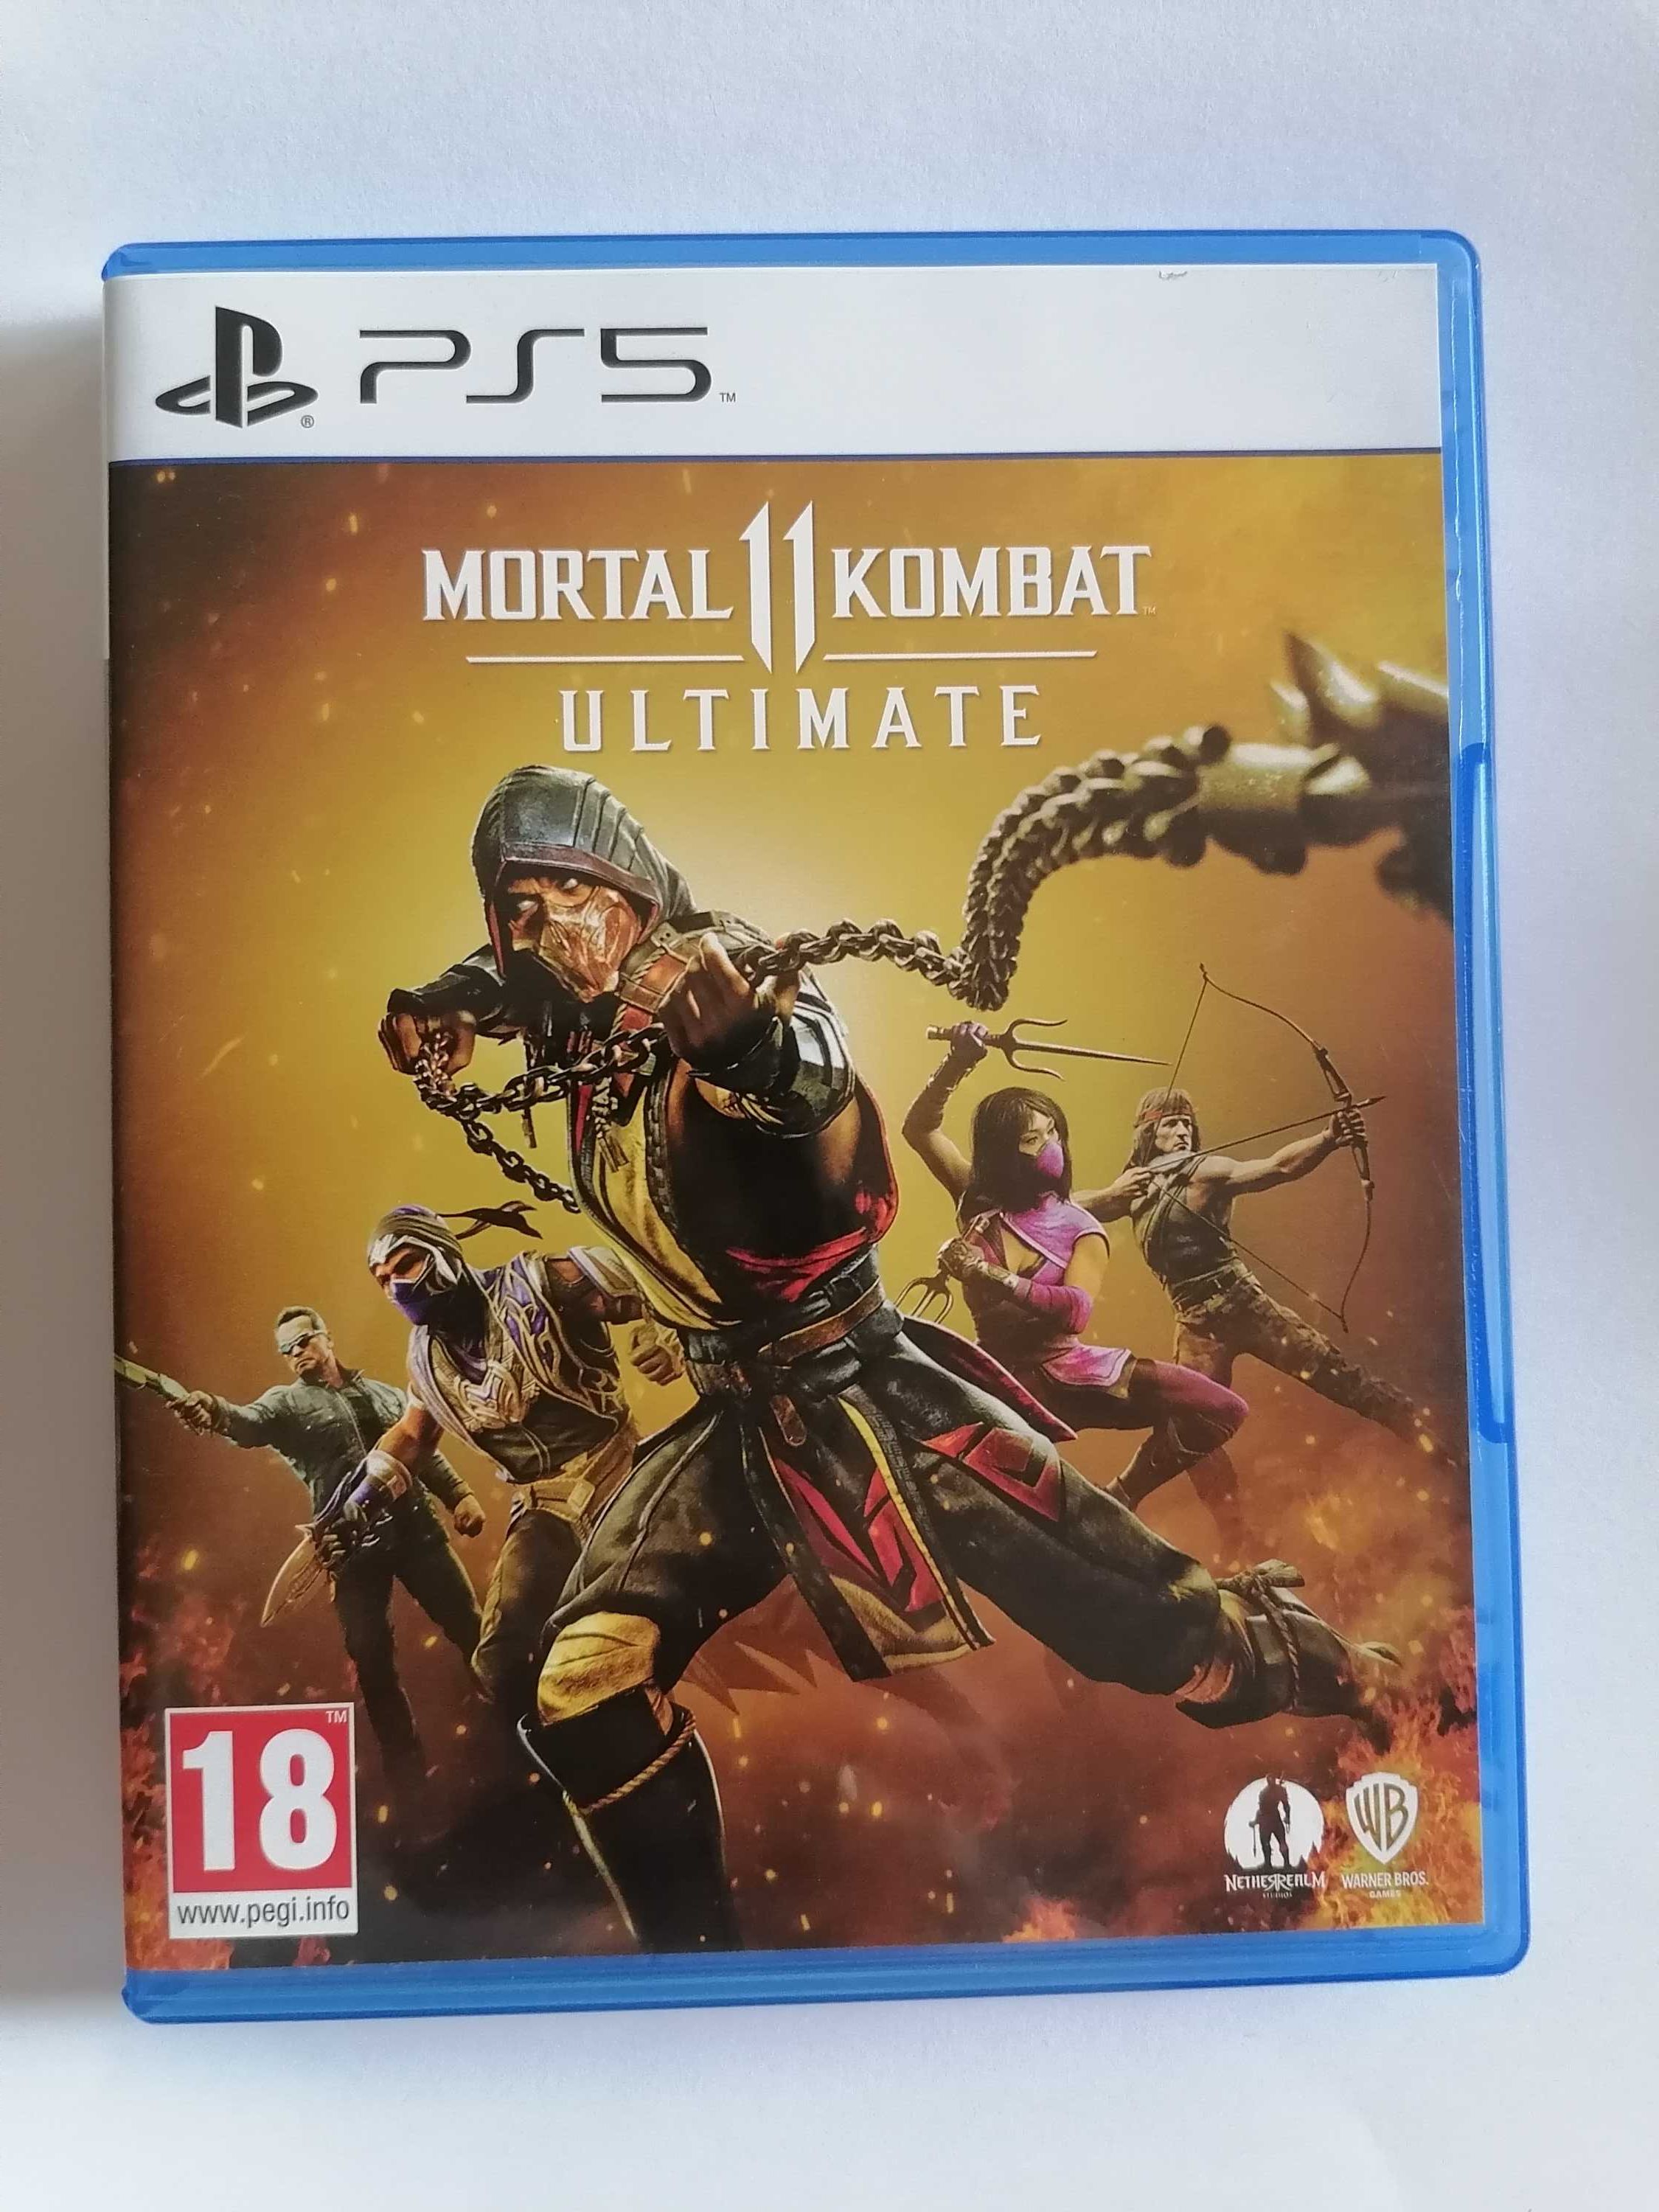 Mortal Kombat 11 Ultimate playstation 5 Mortal Kombat 11 Ultimate ps5